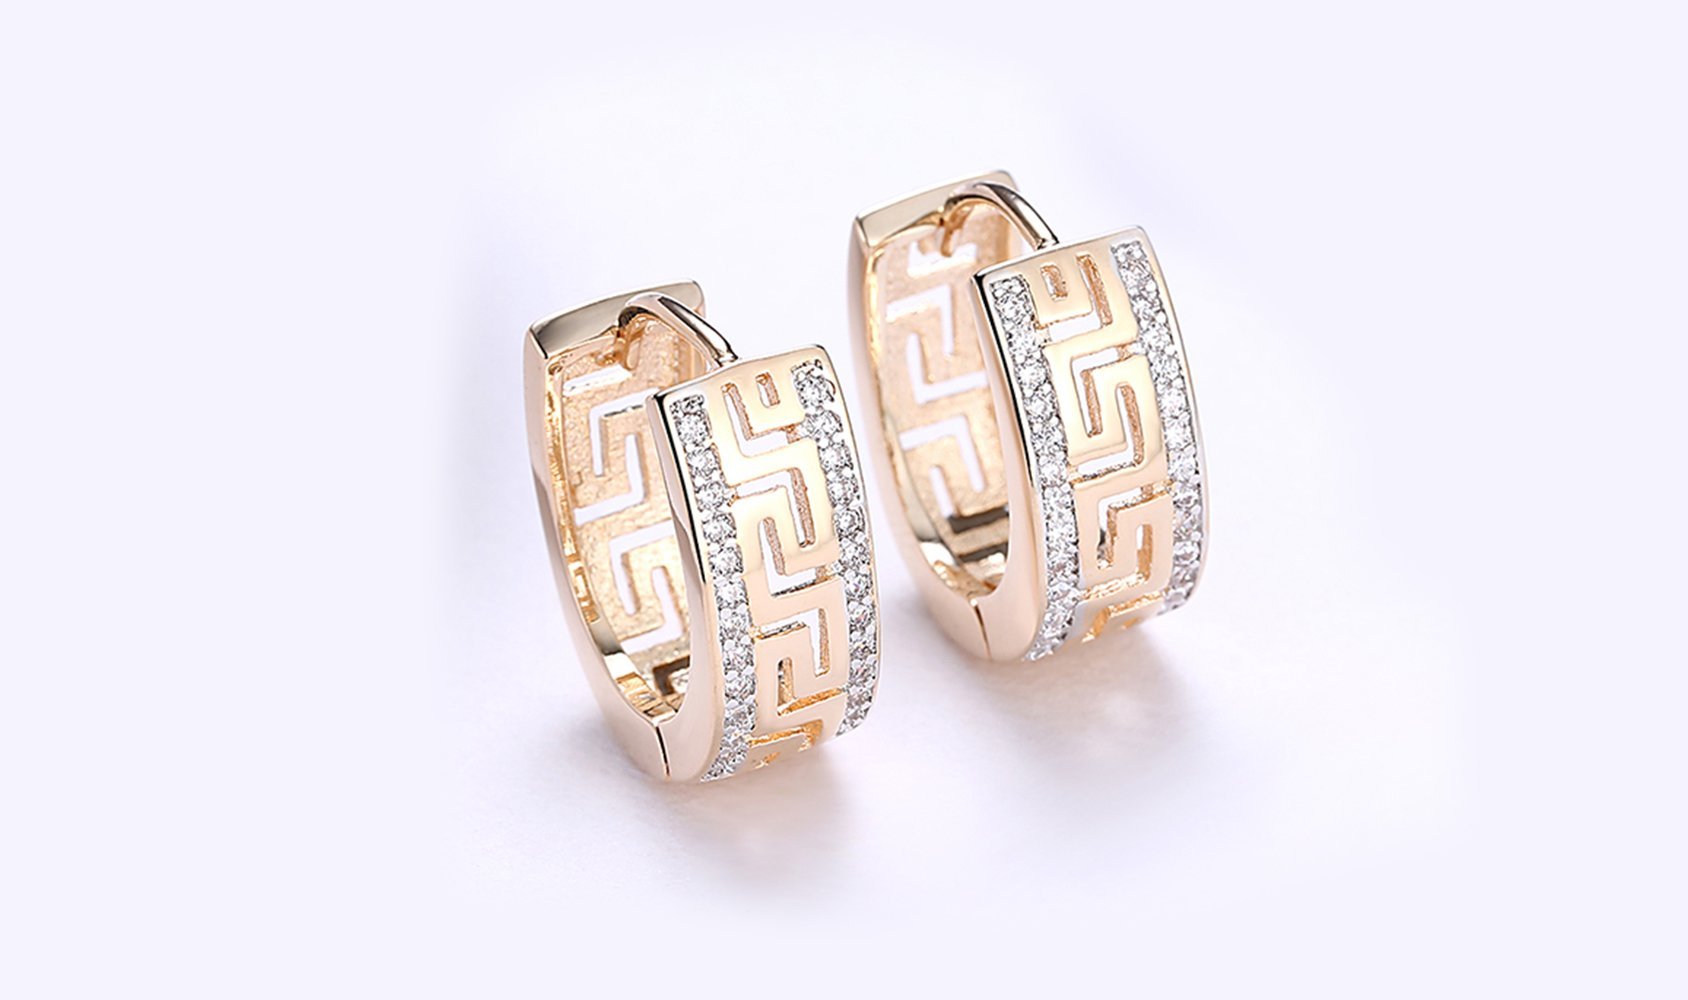 14K Gold Plated Micro-Lining Greek Design Earrings - ItemBear.com